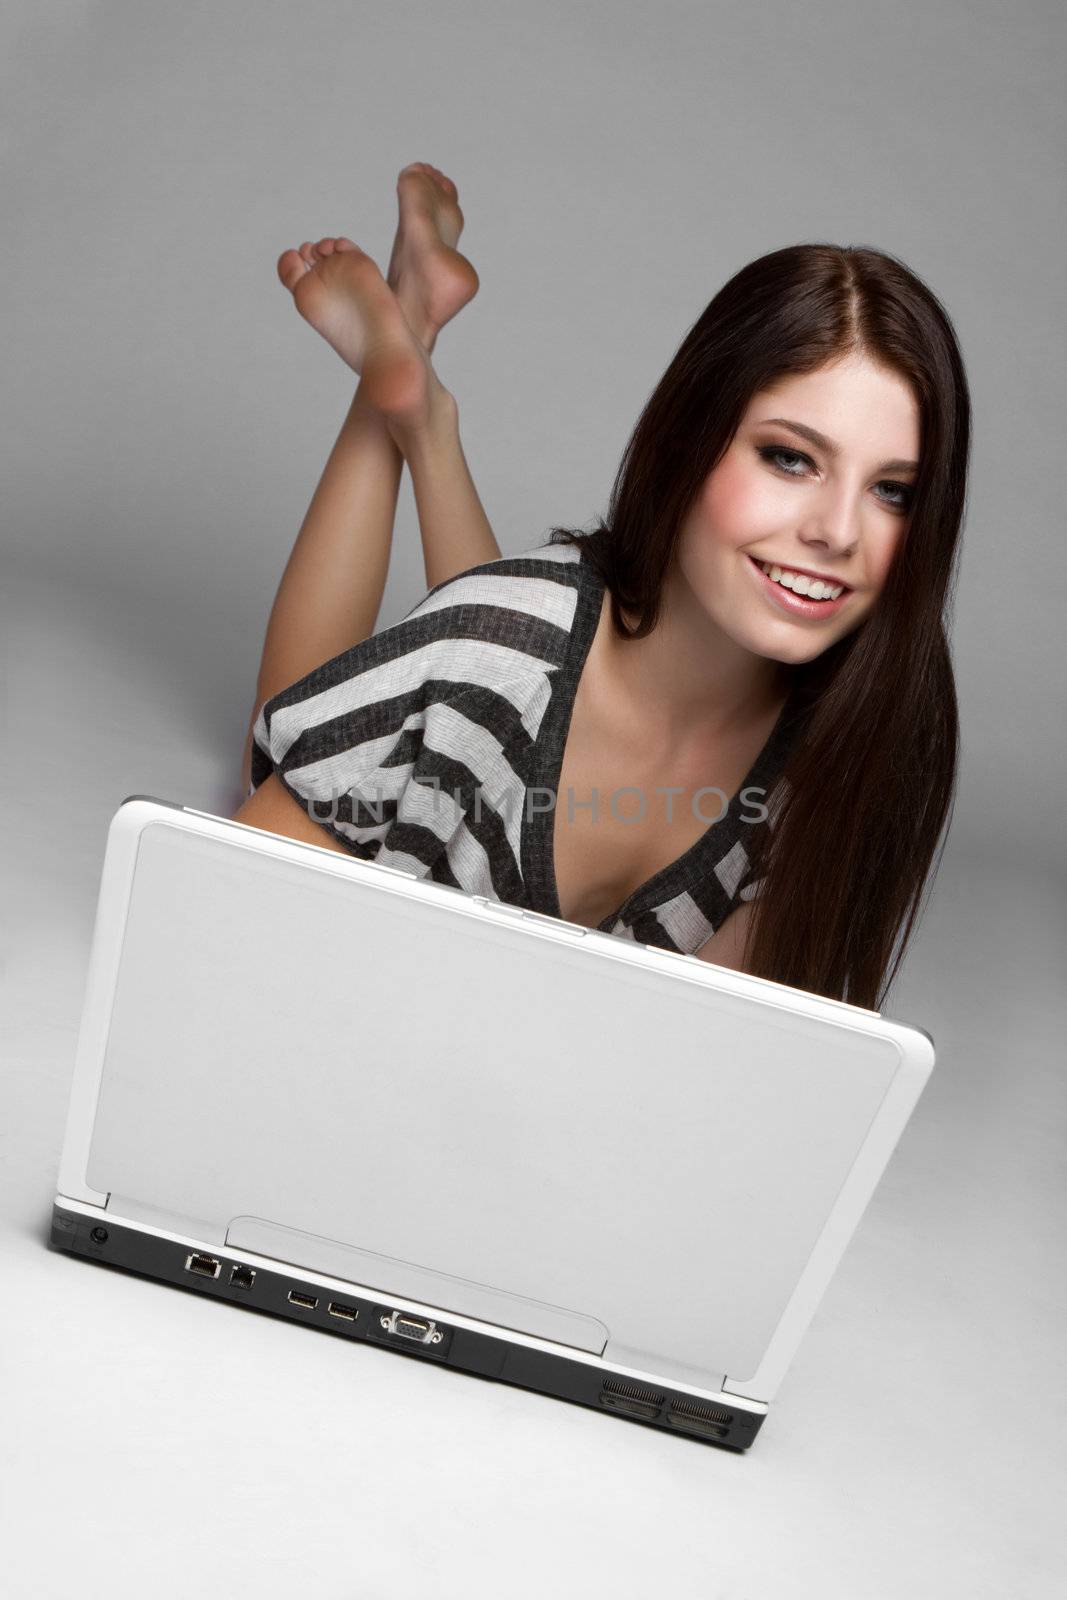 Pretty smiling teen laptop girl